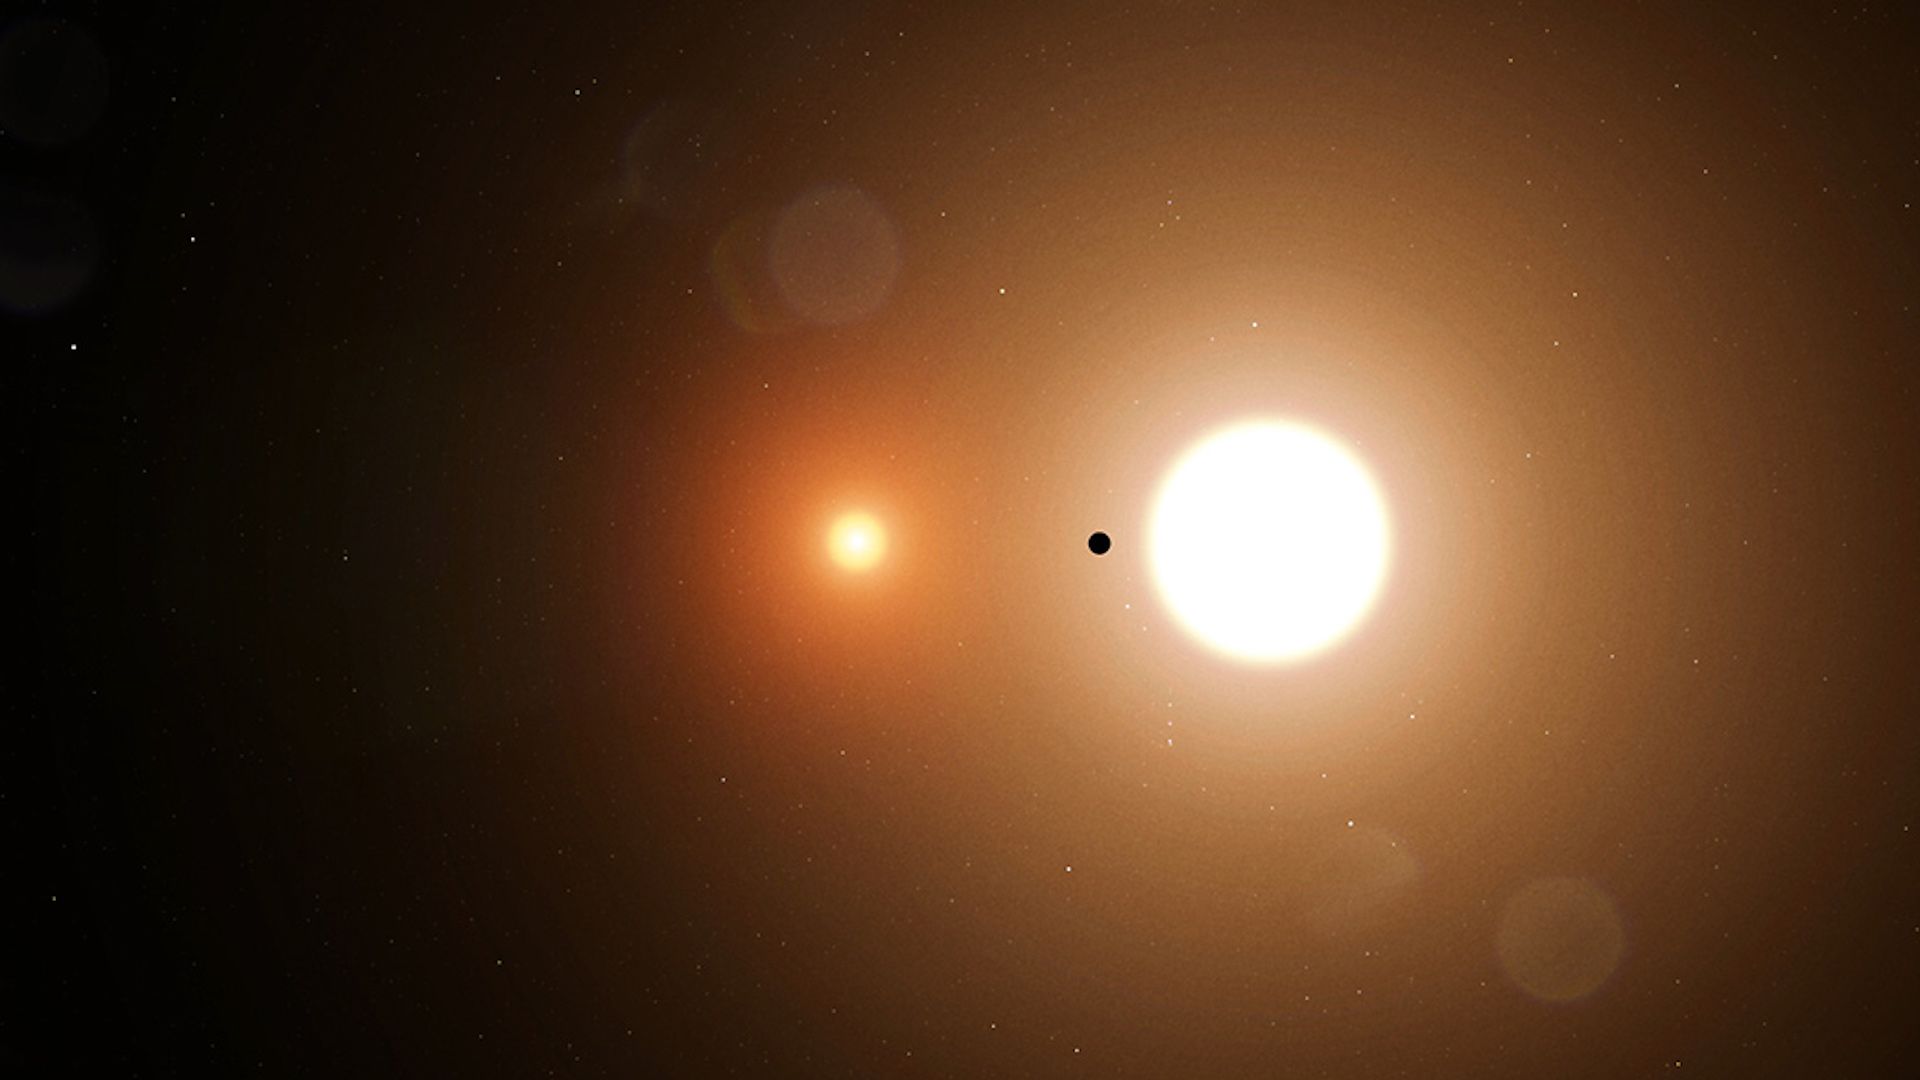 Artist's illustration of a planet orbiting two stars